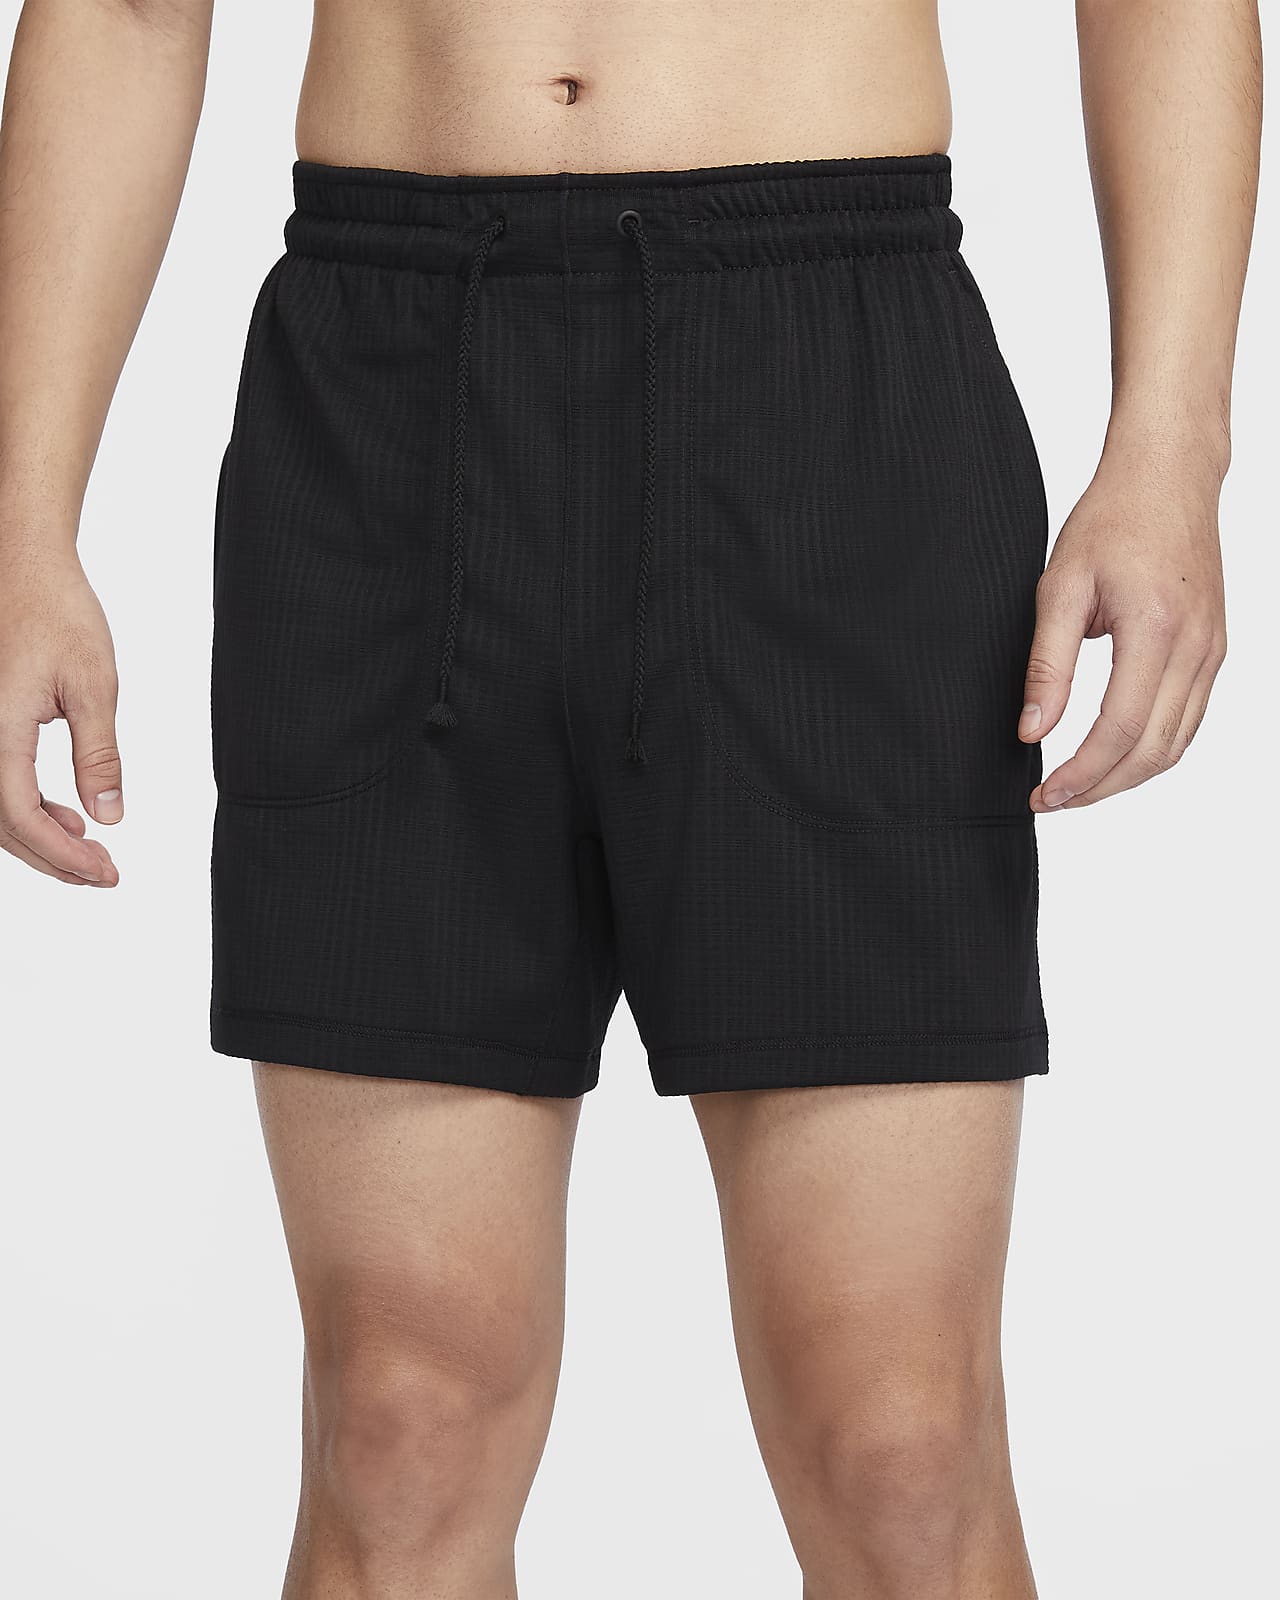 YogaAddict Yoga Shorts for Men, Quick Dry, No Pockets, for Any